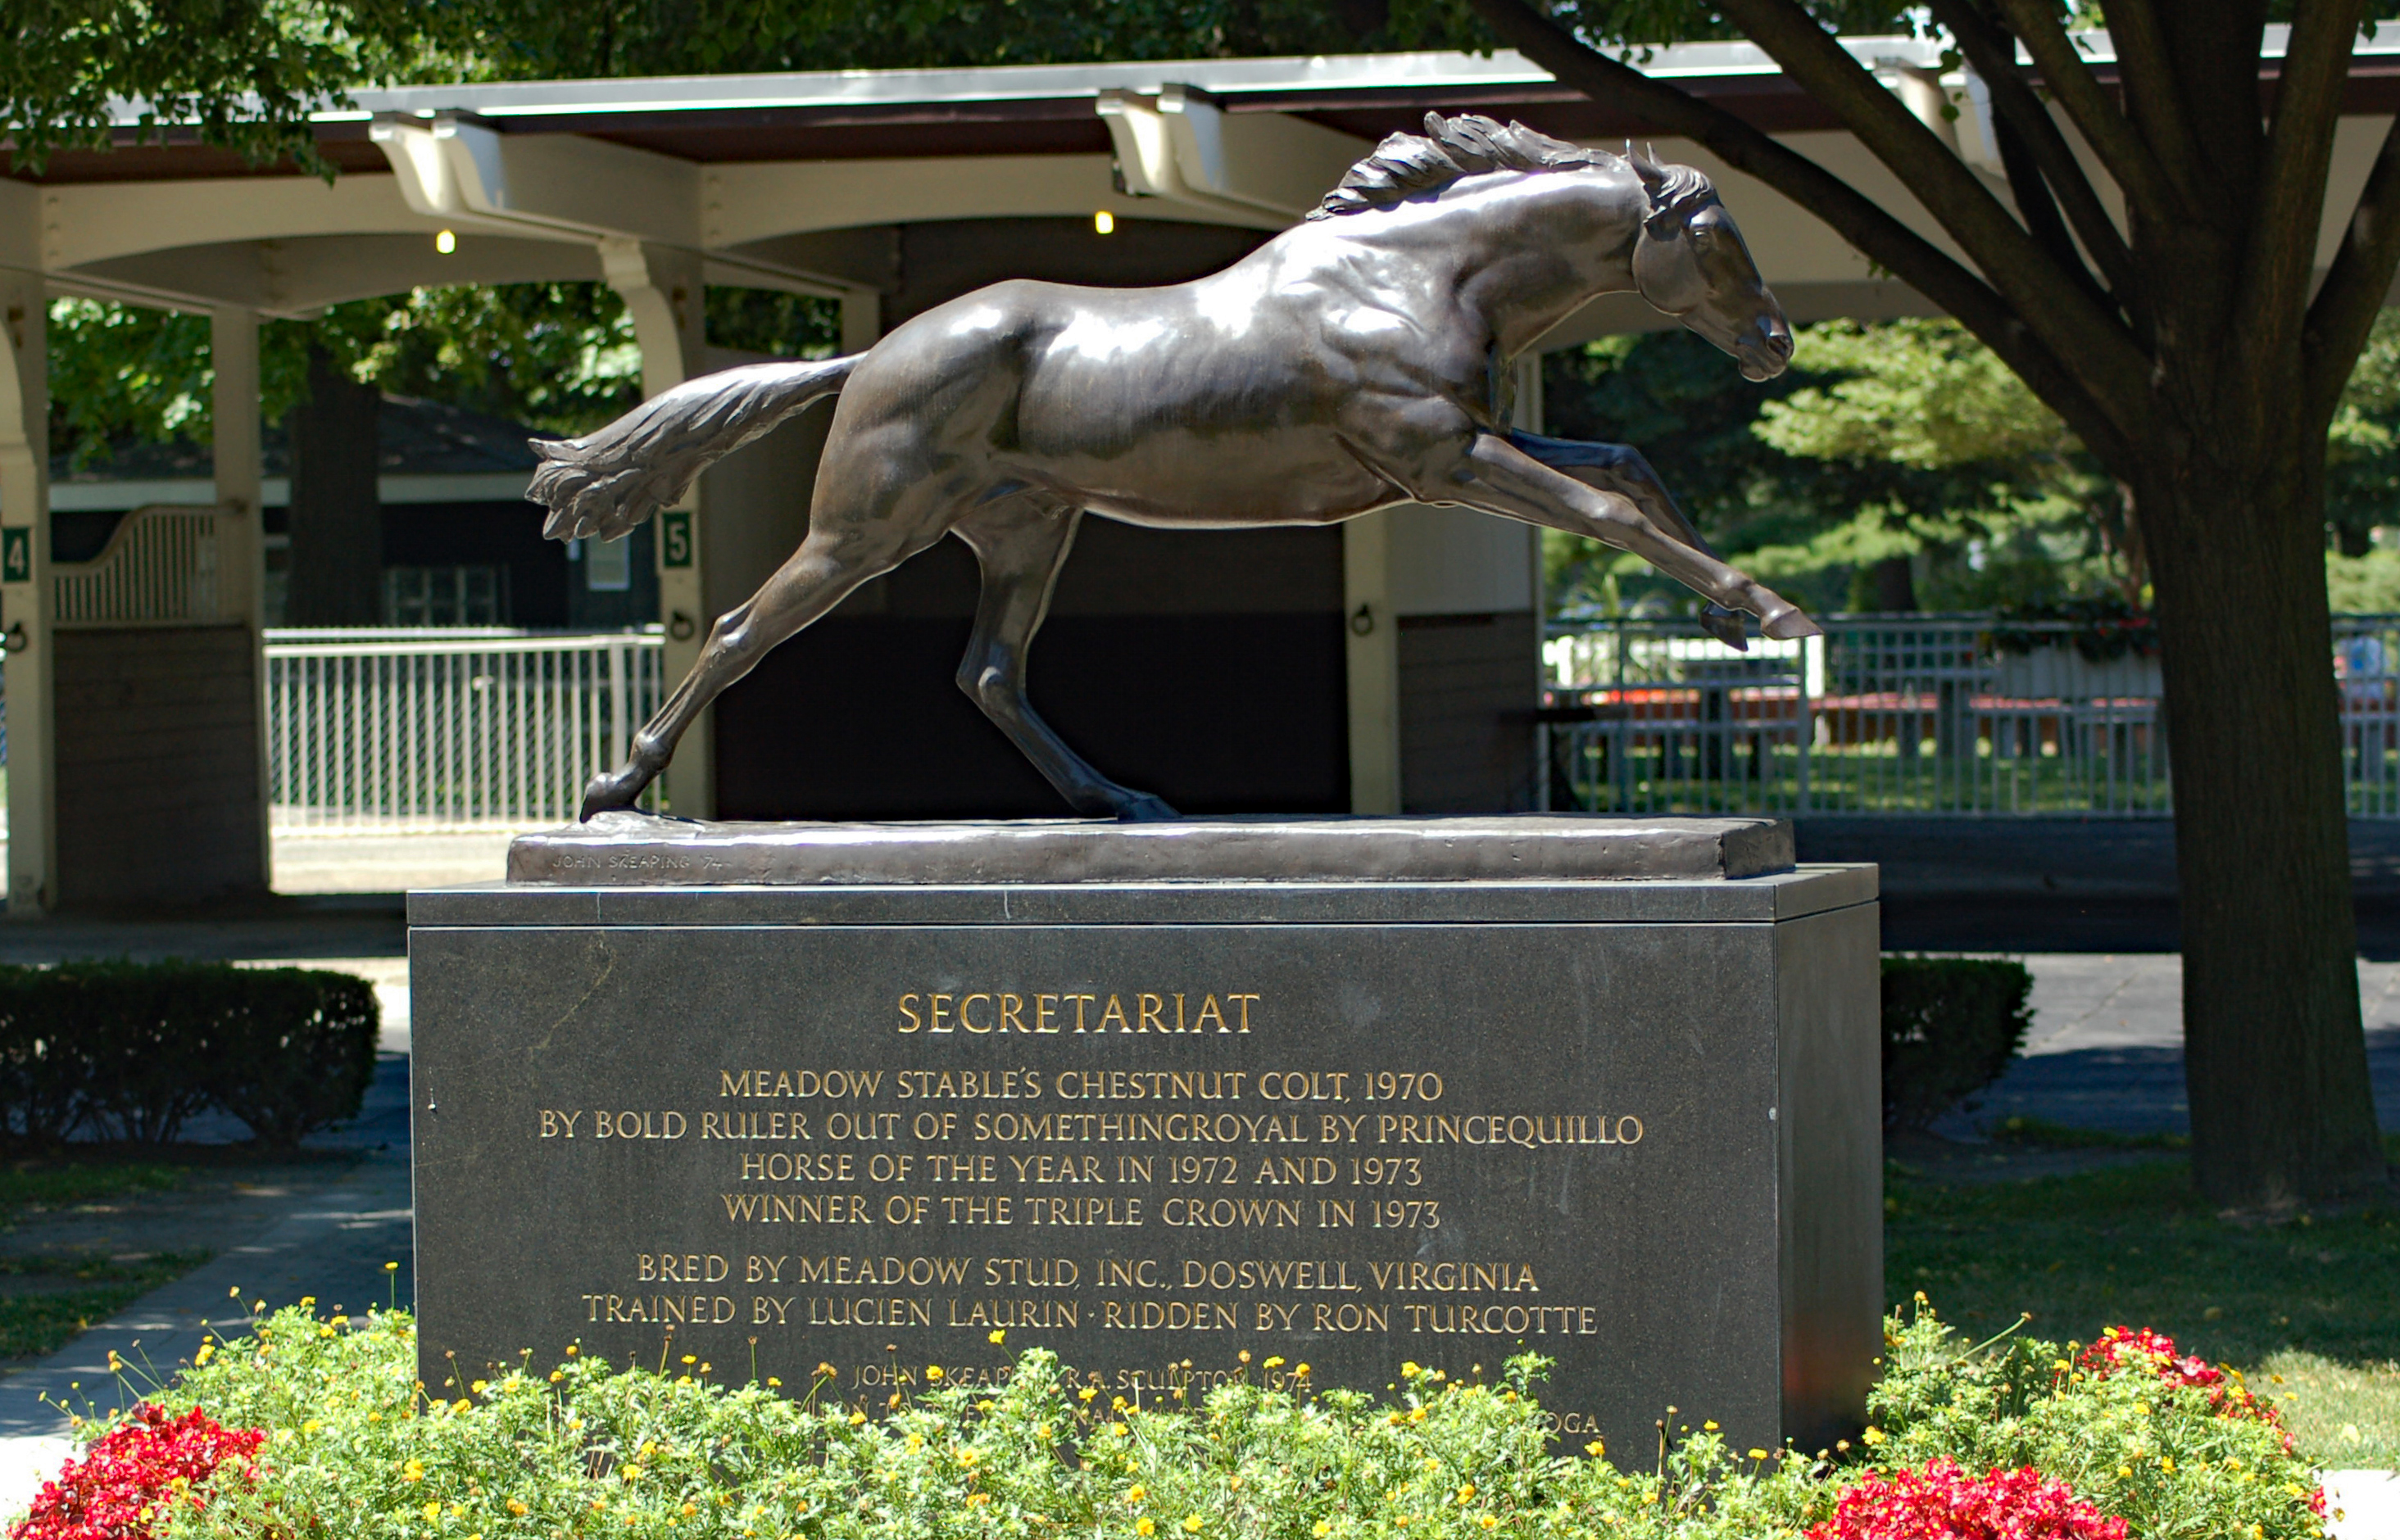 The Secretariat statue resides adjacent to the White Pine in Belmont's paddockJPG